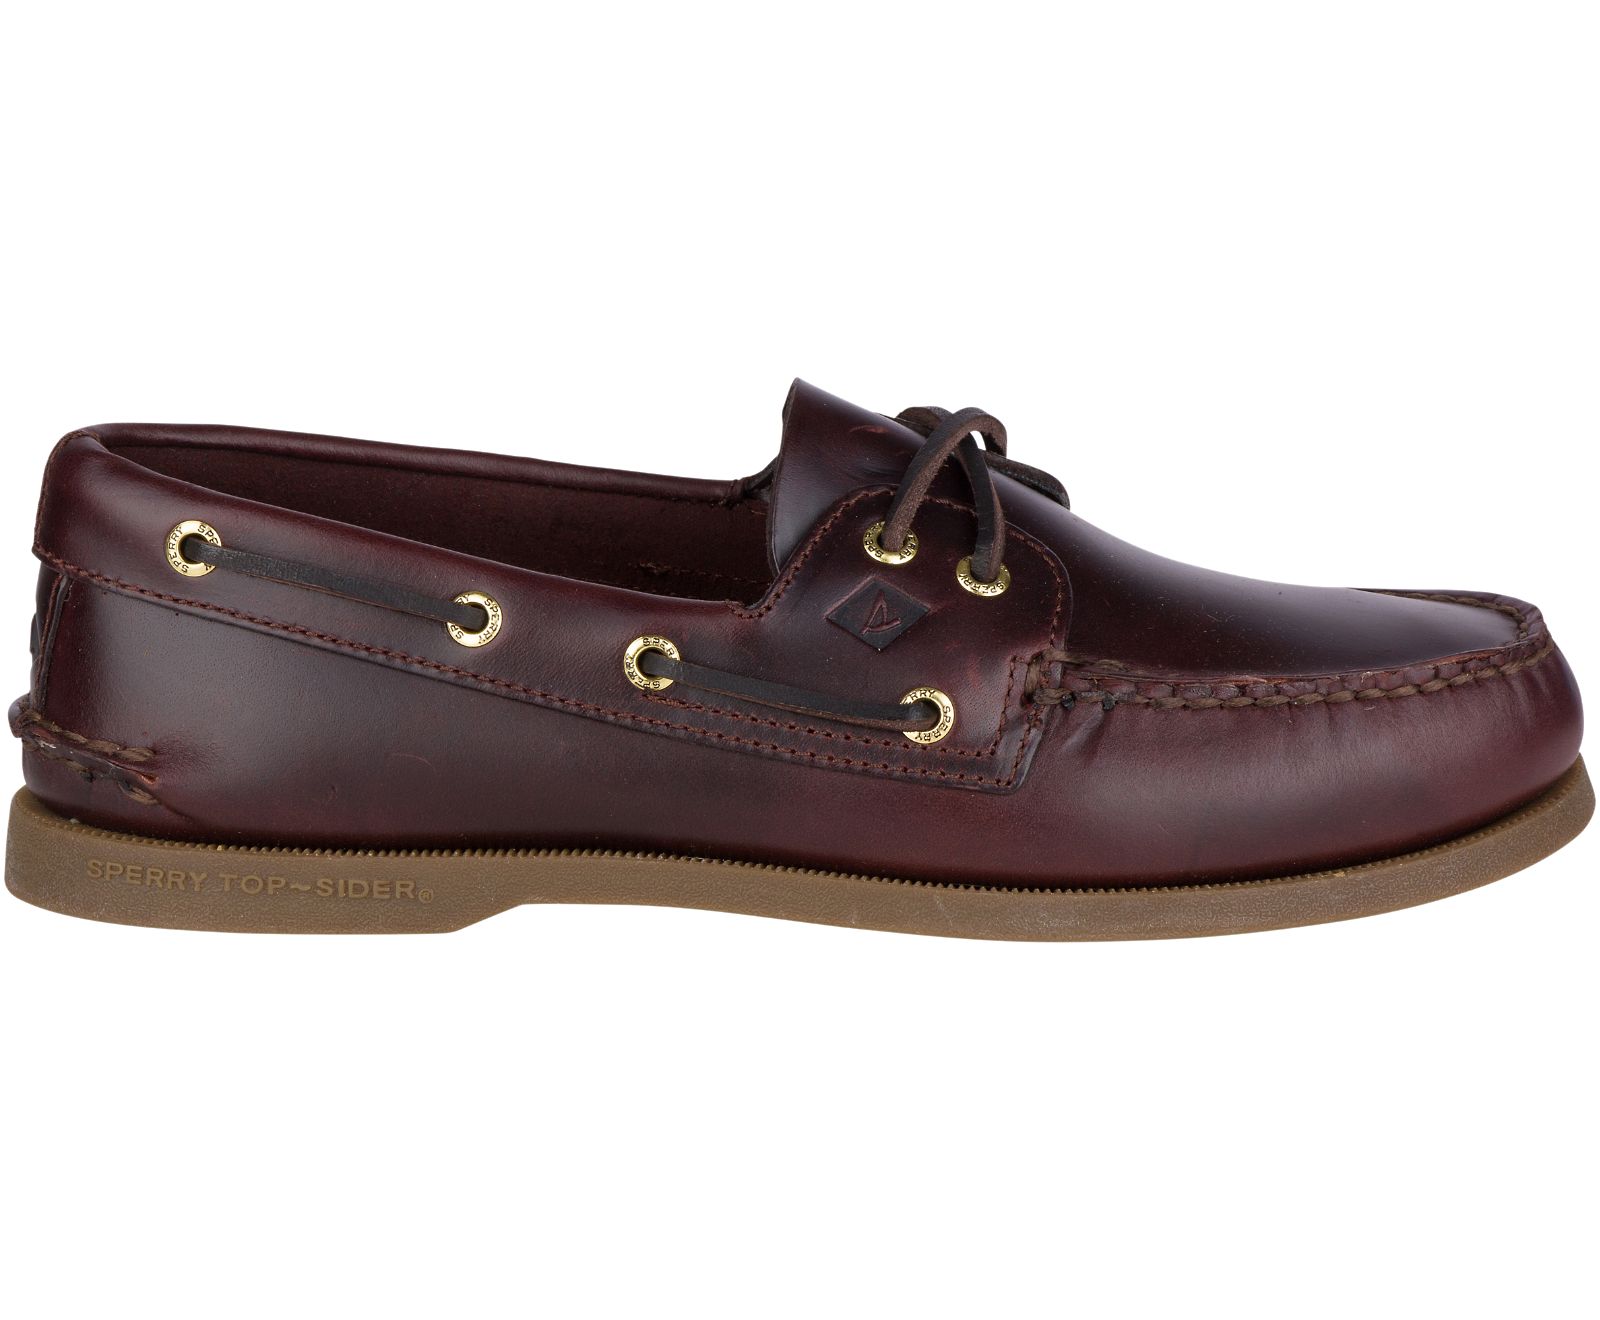 Men's Authentic Original Leather Boat Shoe - Amaretto - Click Image to Close